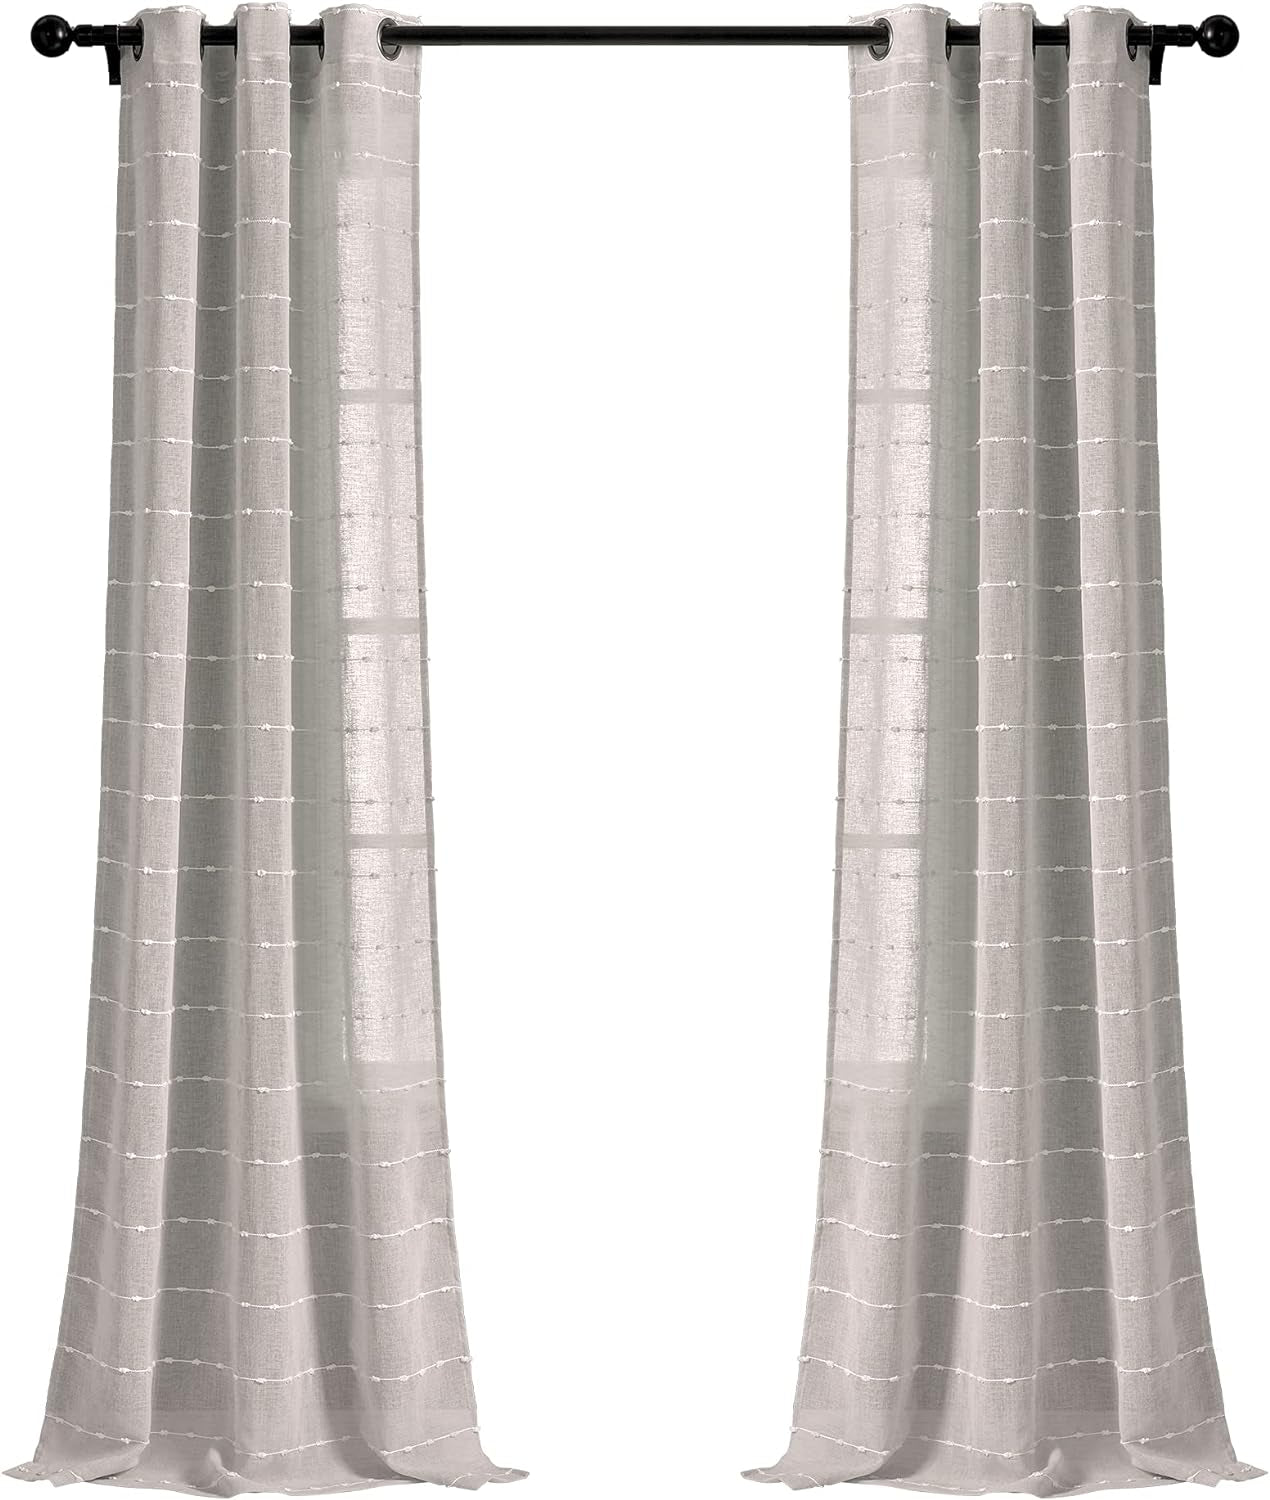 Lush Decor Farmhouse Textured Grommet Sheer Window Curtain Panel Pair, 38"W X 95"L, Gray  Triangle Home Fashions   